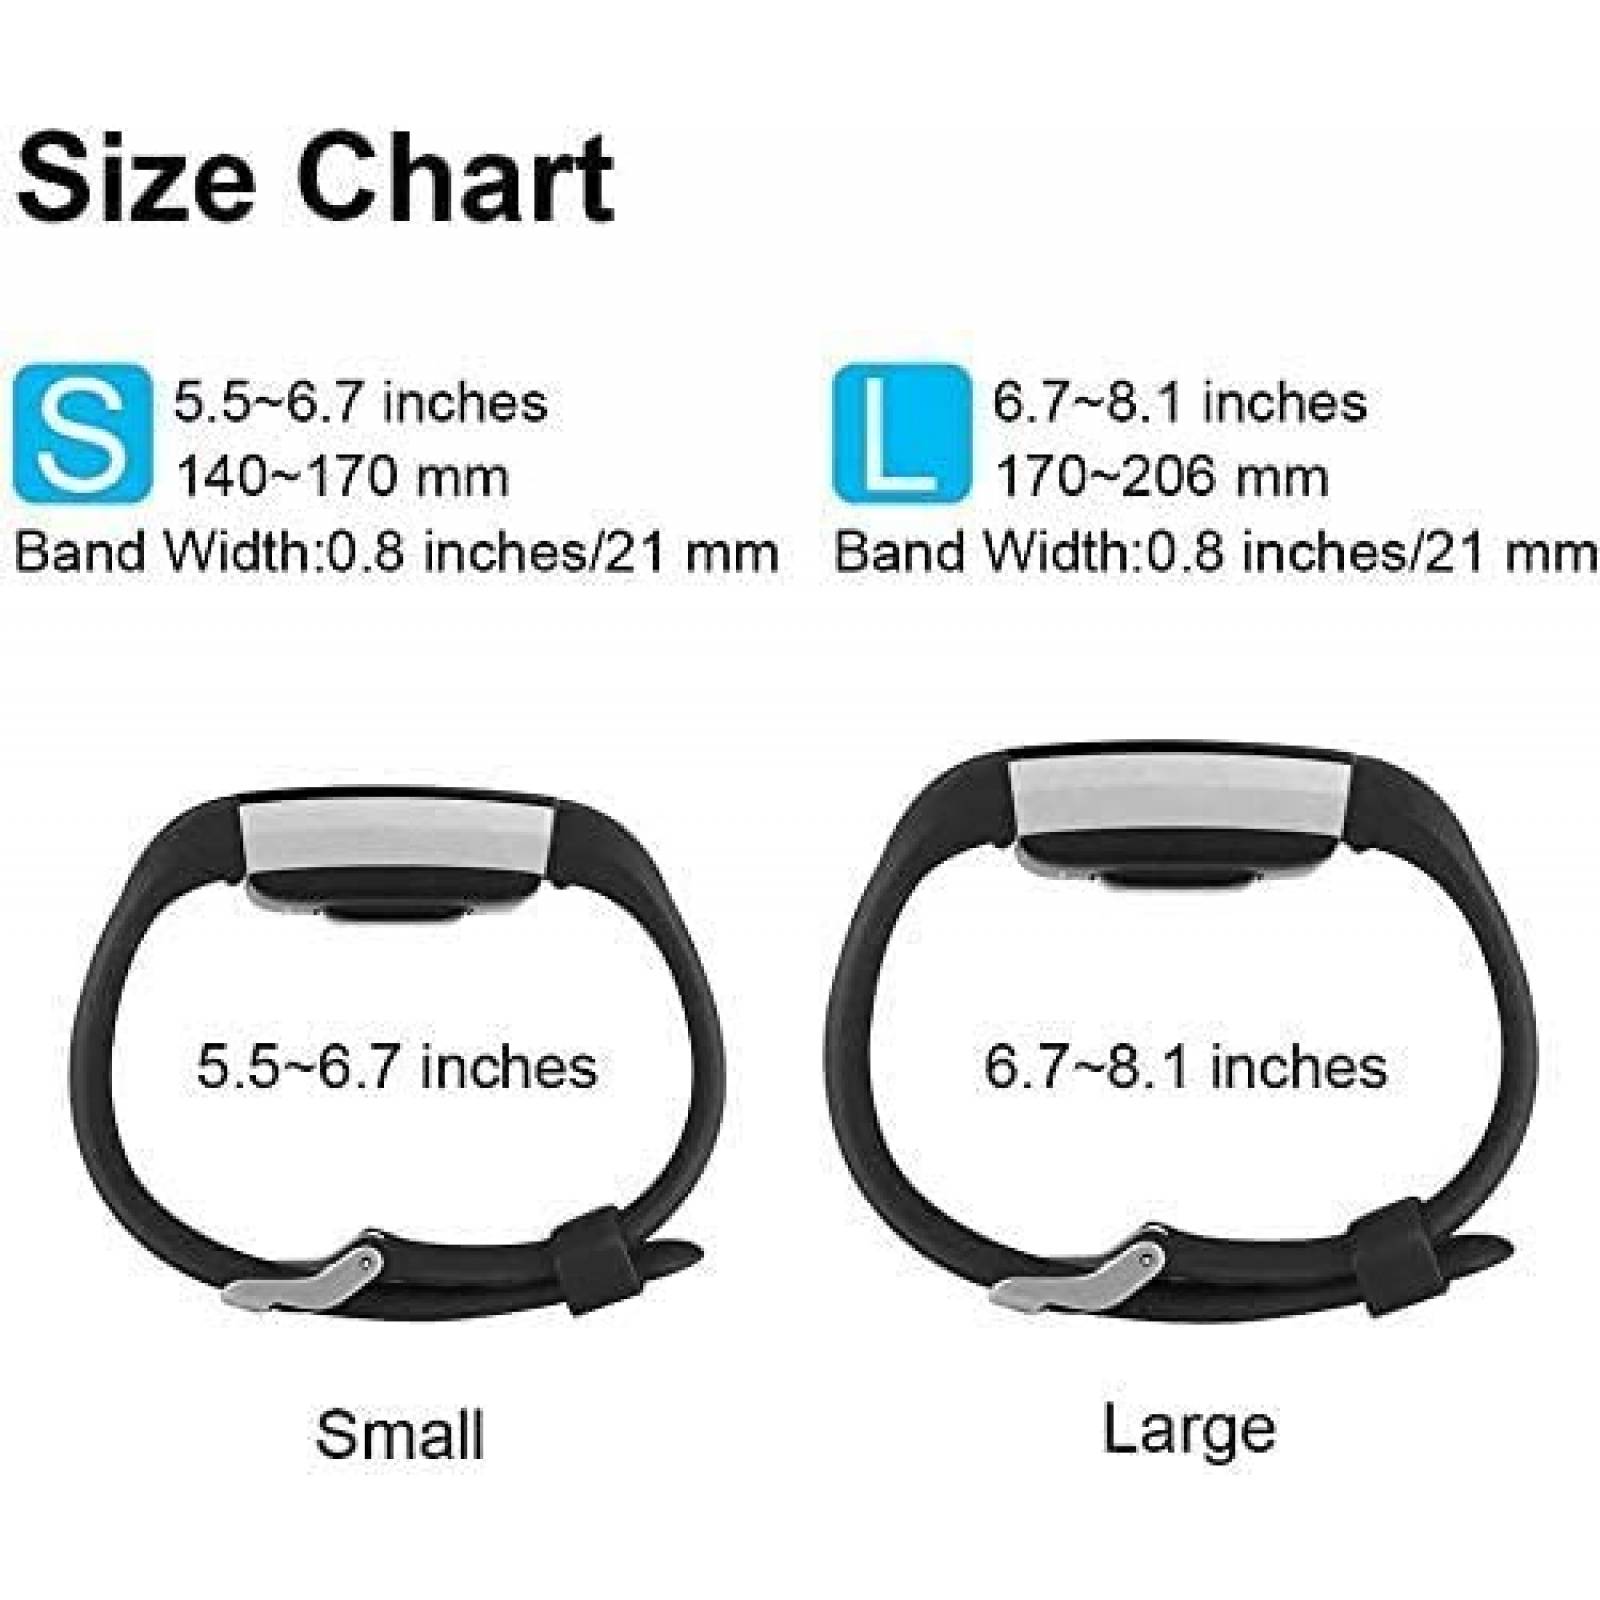 Bandas para Smartwatch IEOVIEE Fitbit Charge 2 3 Pzs S -Rosa